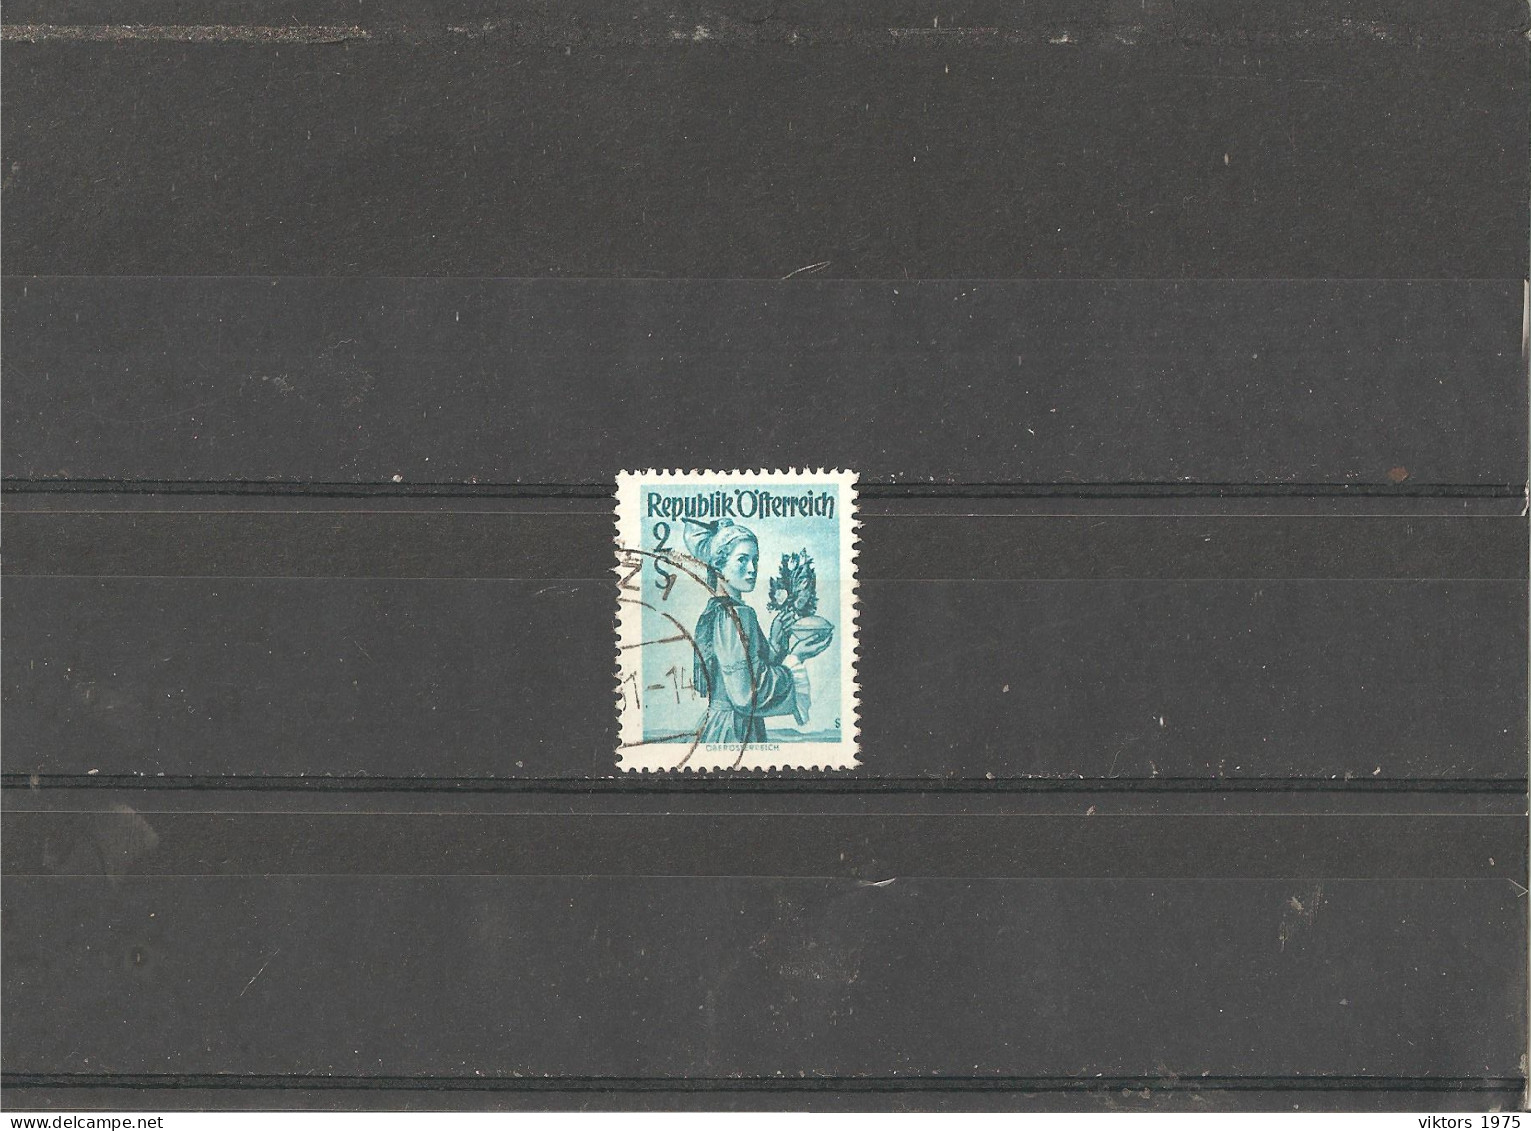 Used Stamp Nr.919 In MICHEL Catalog - Gebraucht